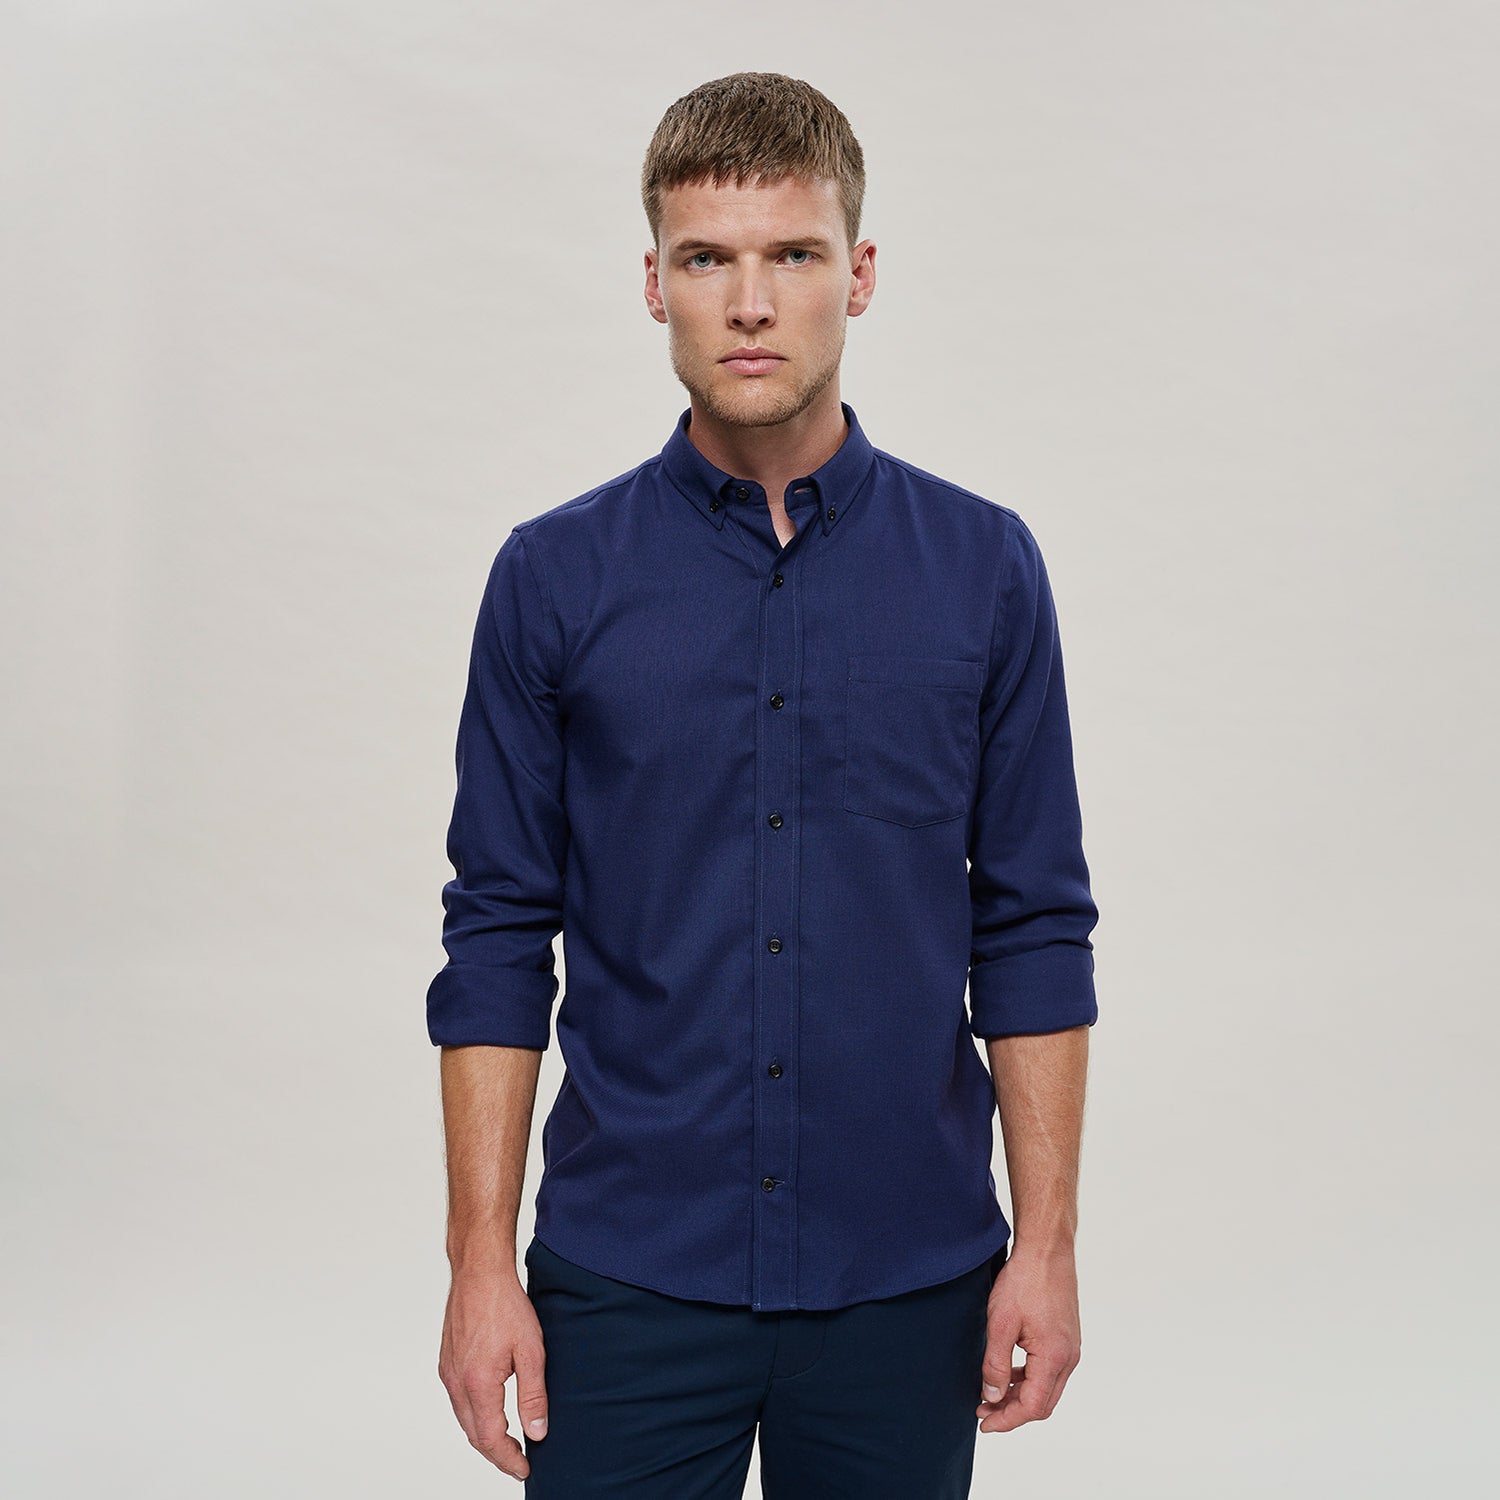 The Merino Wool Oxford Shirt - Timless OCBD Button Down - Woolday